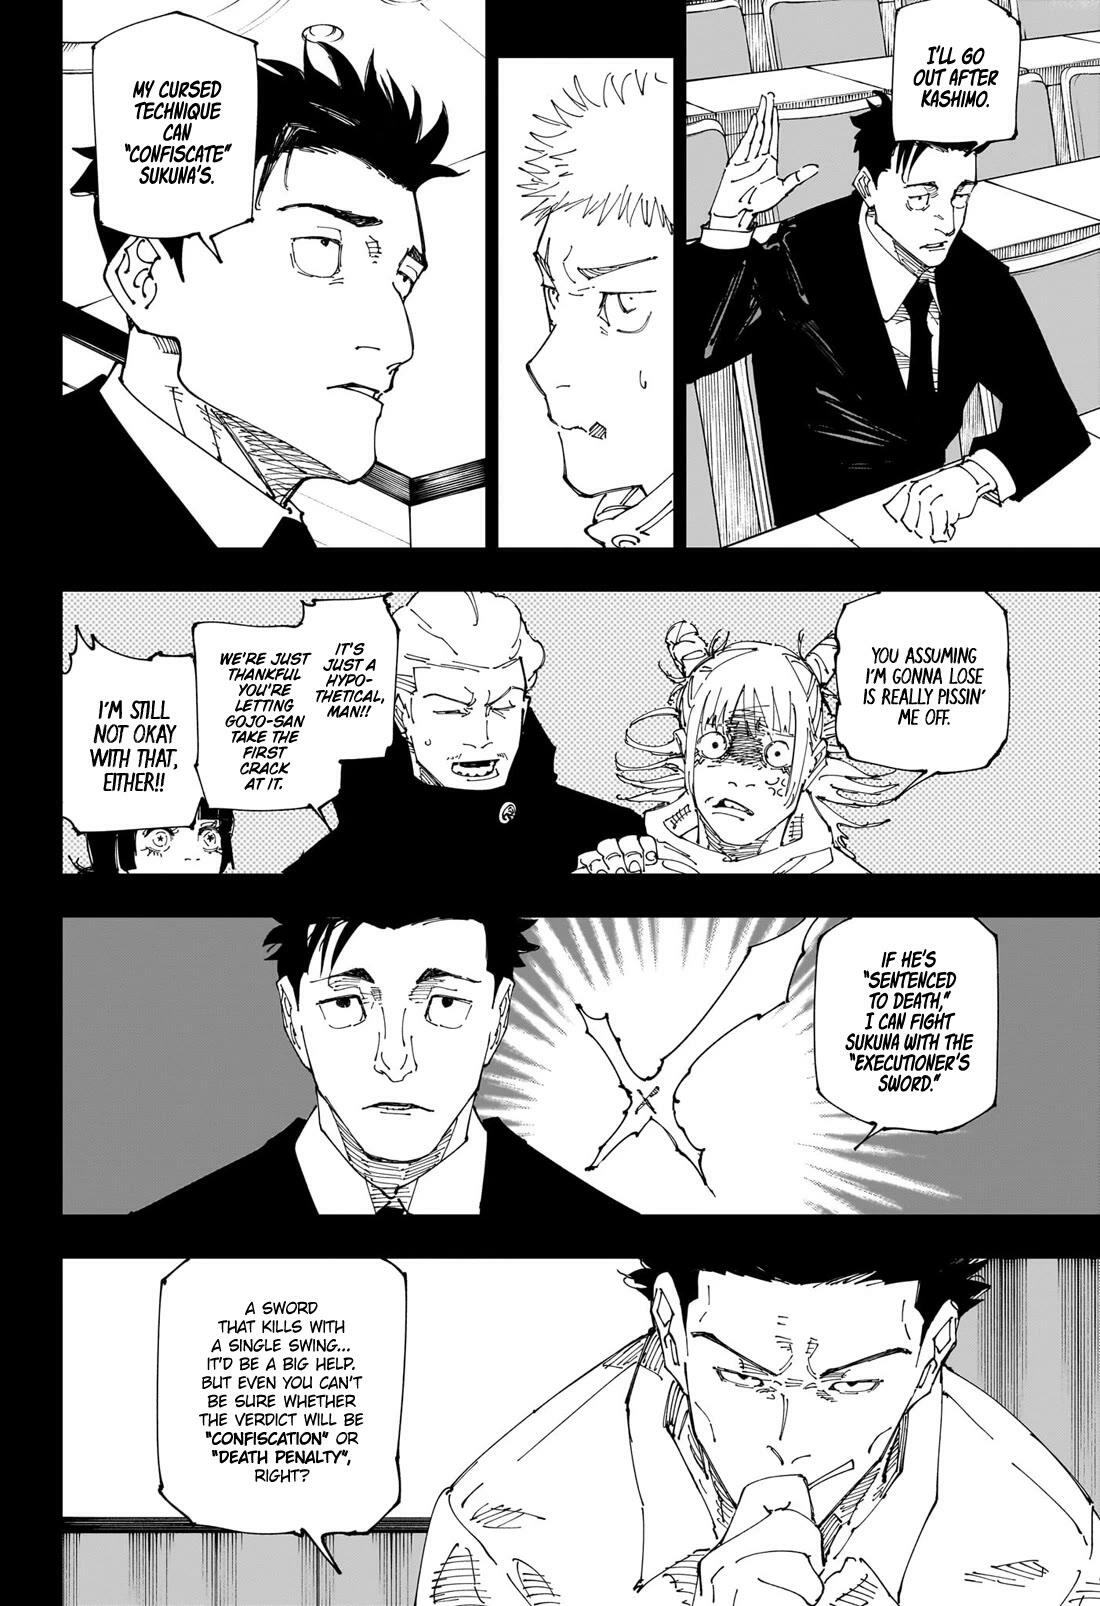 Jujutsu Kaisen Chapter 244: The Decisive Battle In The Uninhabited, Demon-Infested Shinjuku ⑯ page 5 - Mangakakalot